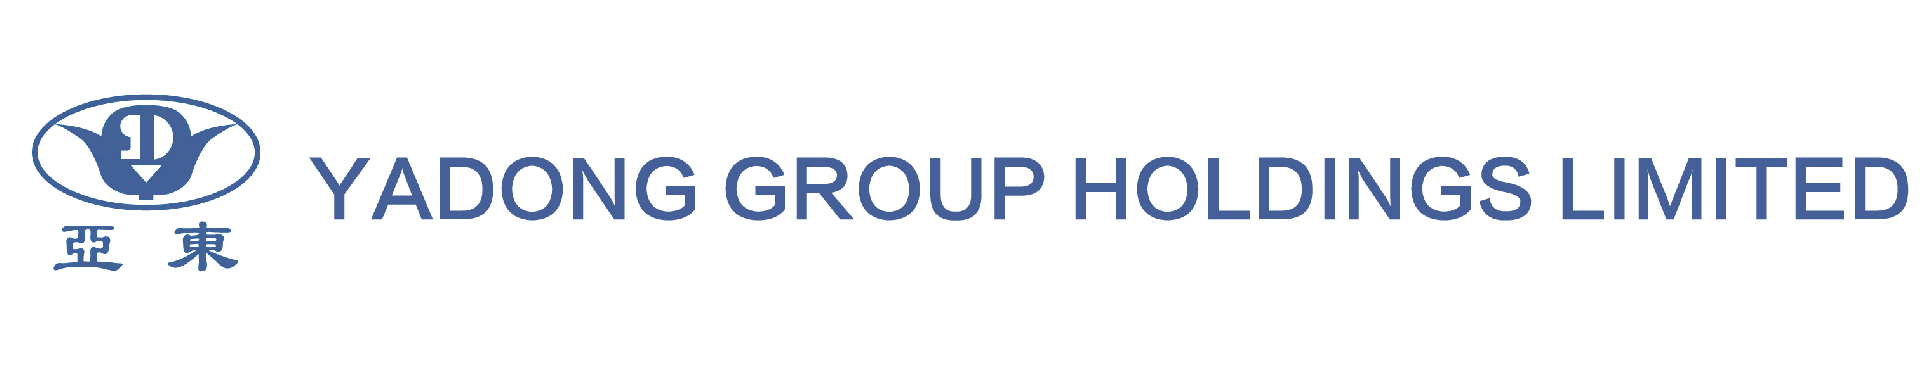 Yadong Group Holding Co. LTD